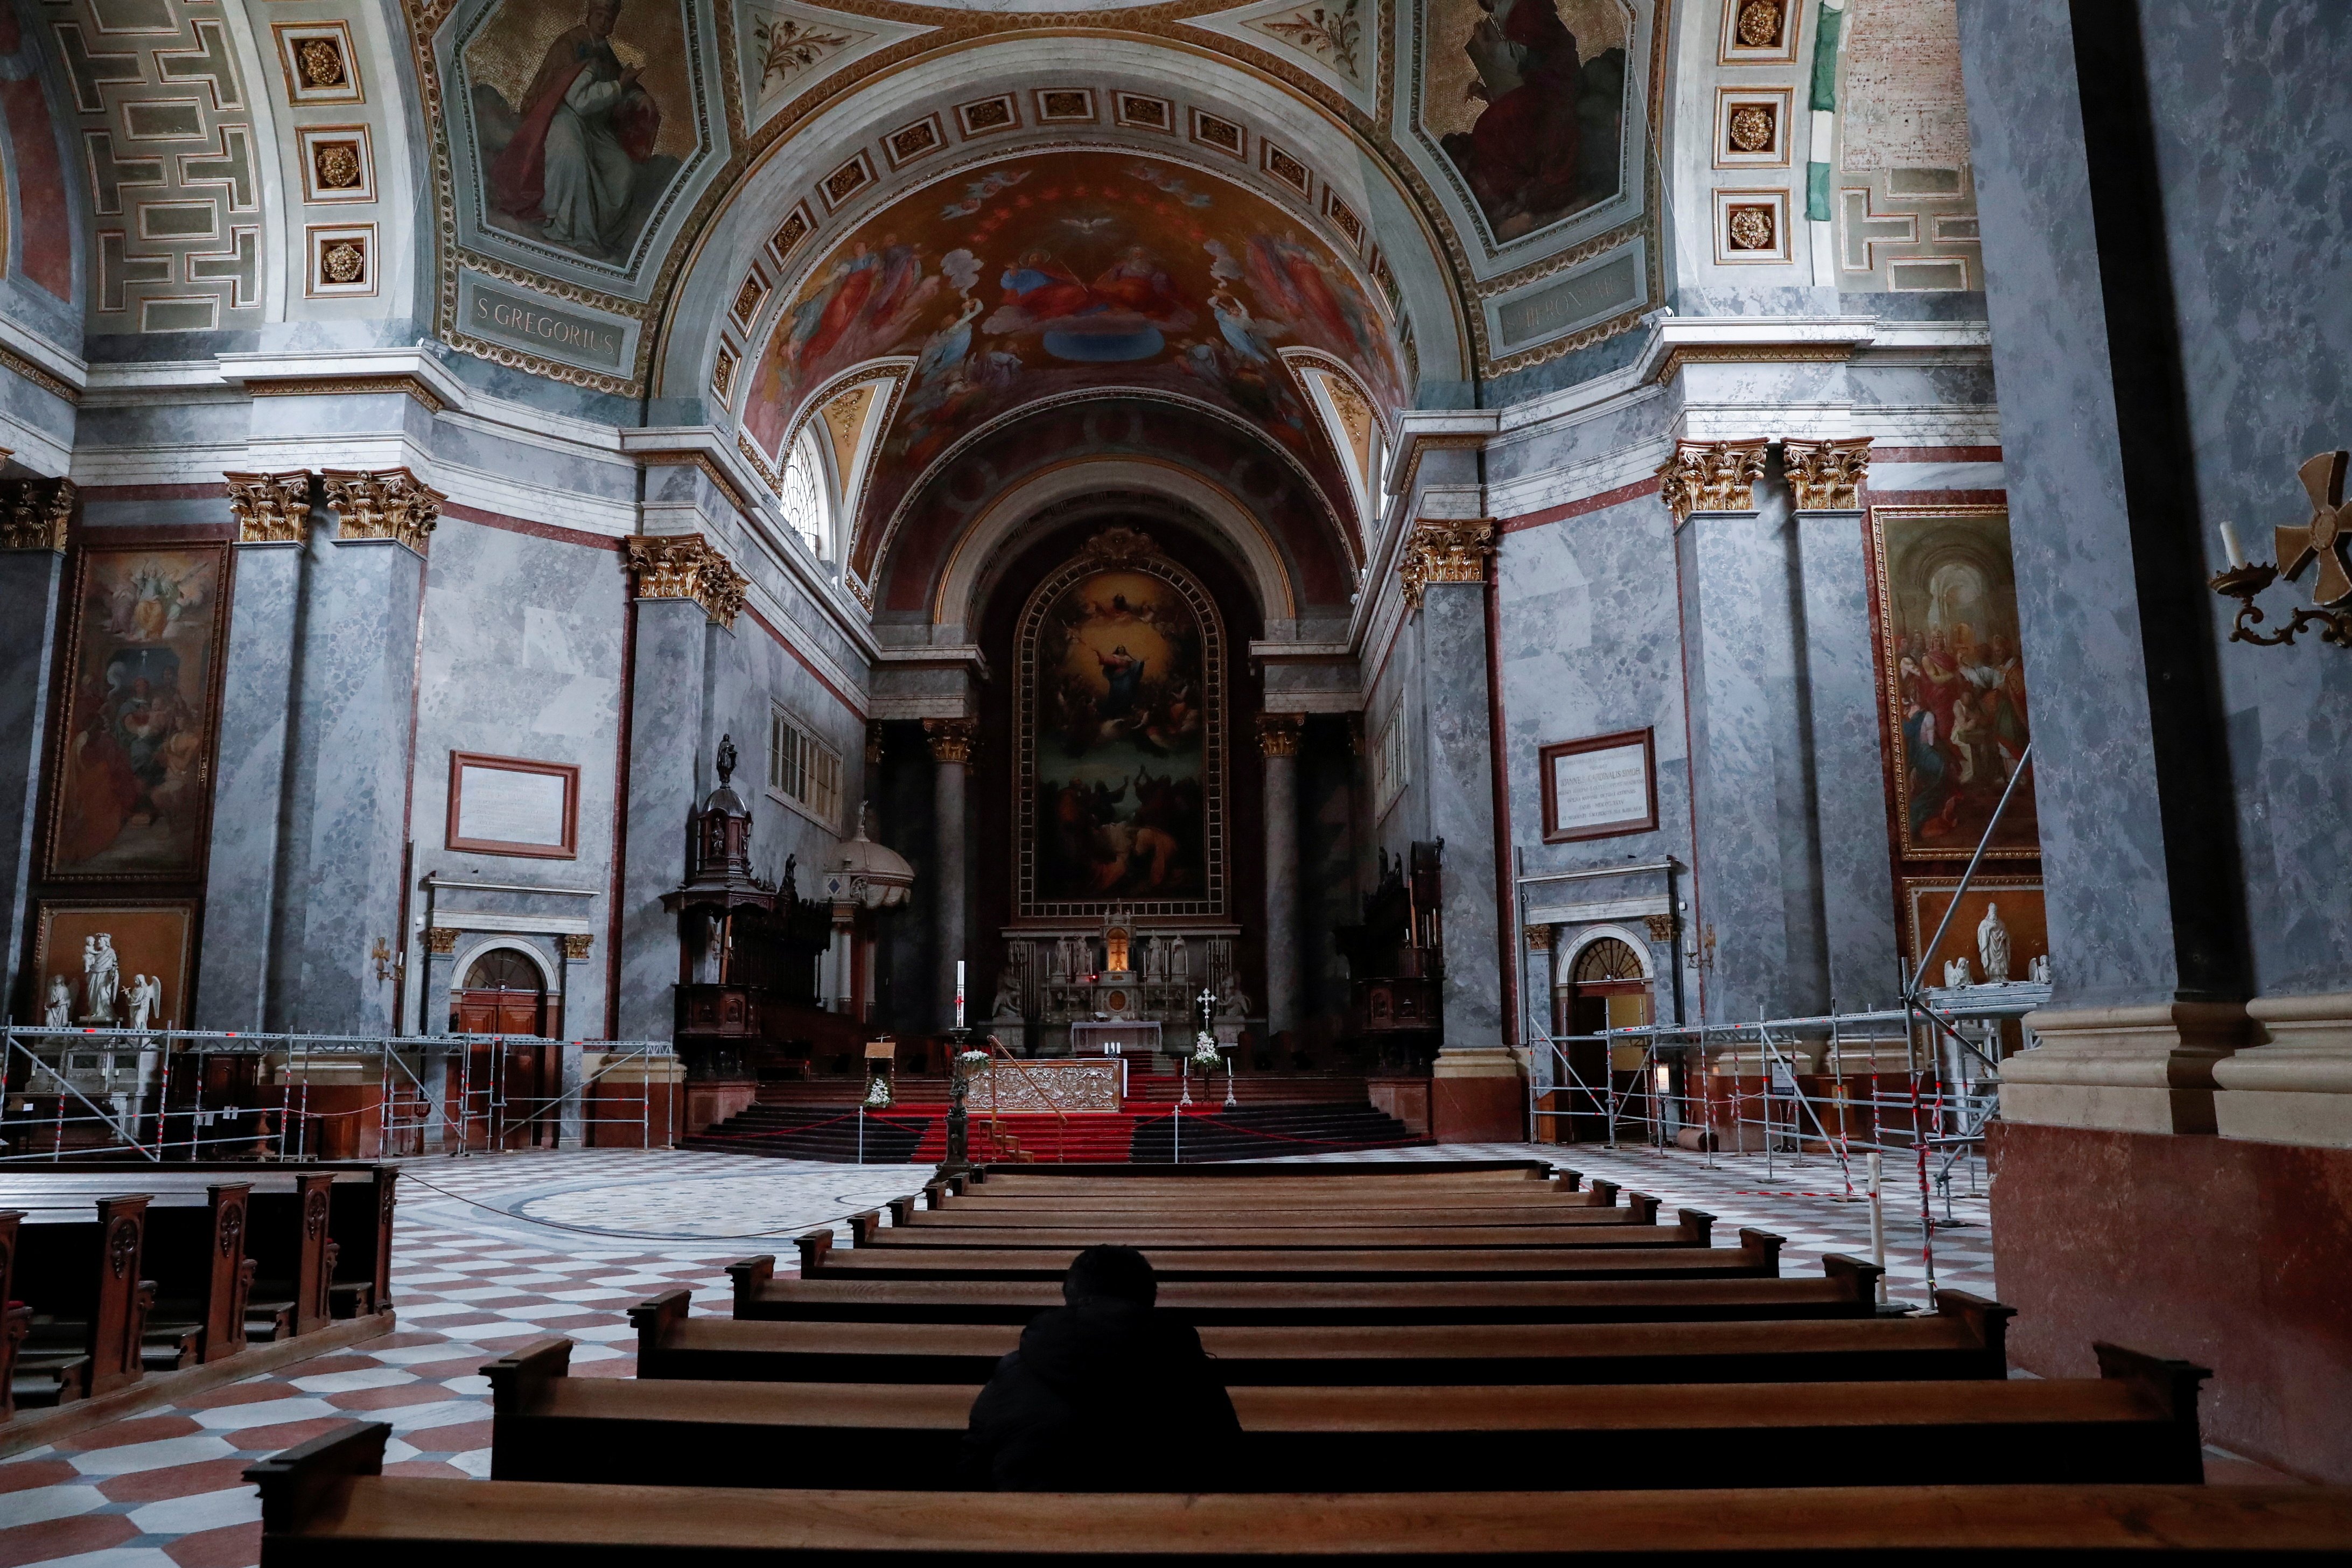 A person prays inside the Catholic basilica in Esztergom, Hungary, April 14, 2021.